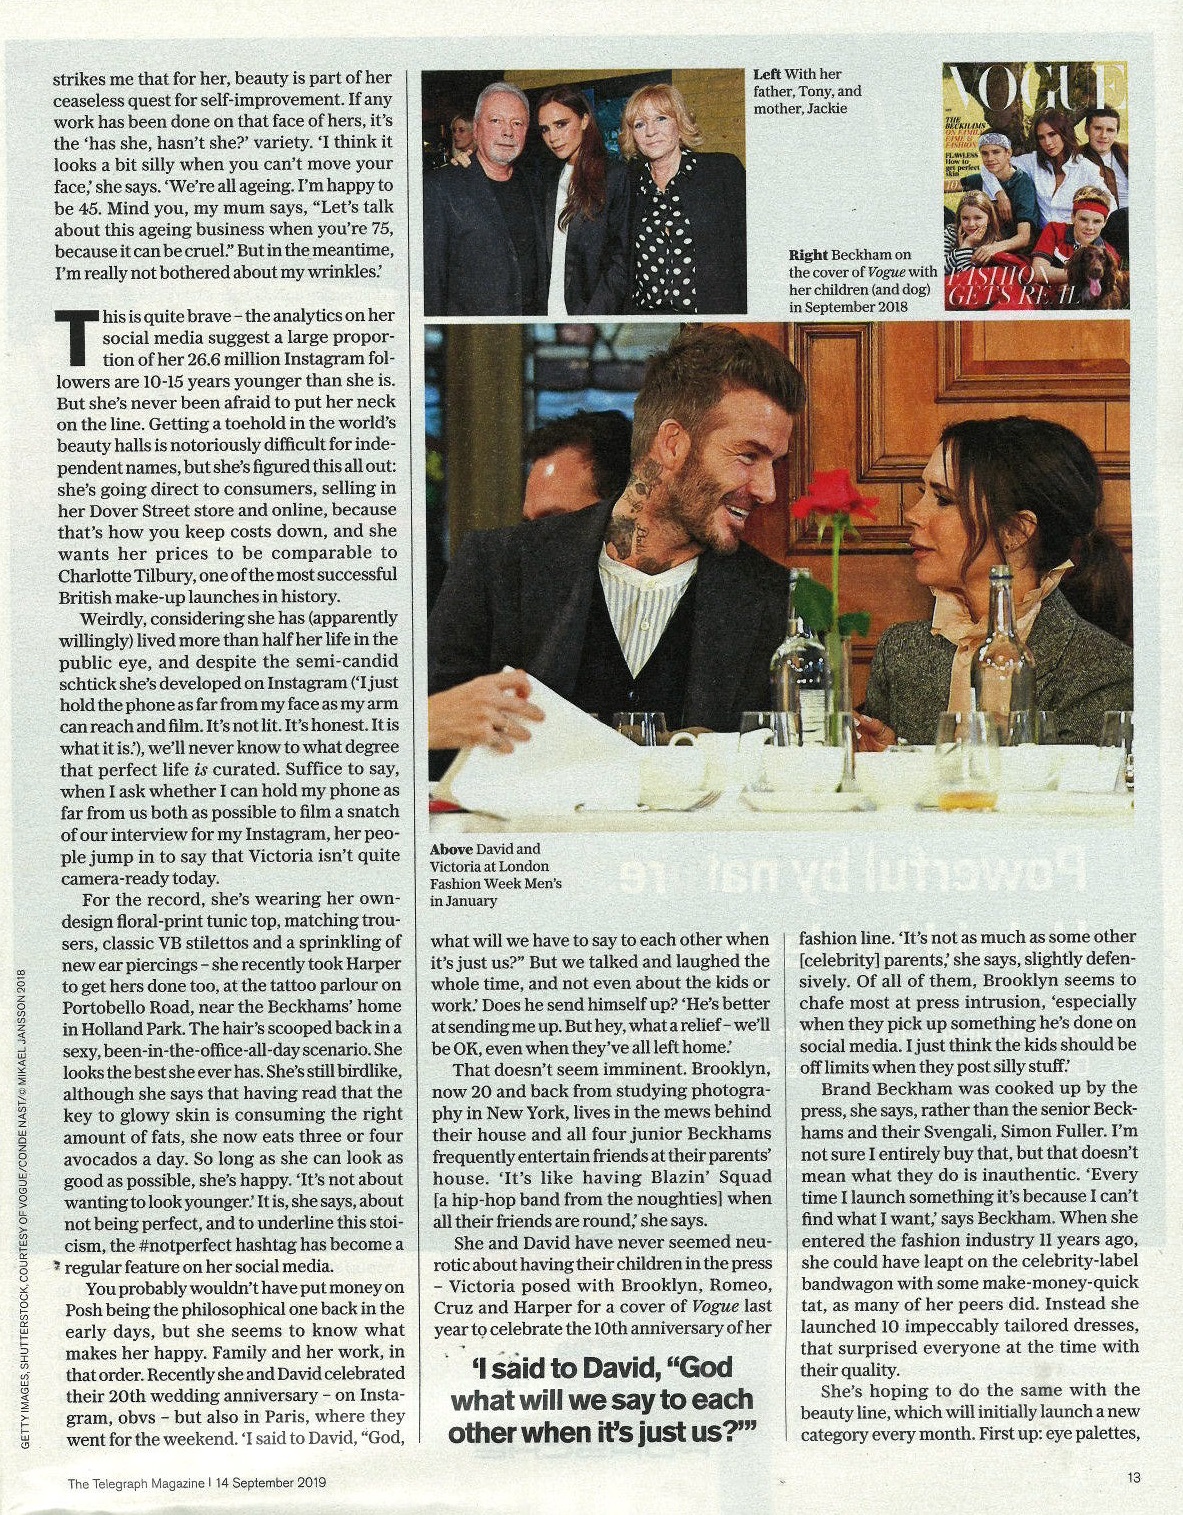 The Telegraph Magazine, Victoria's New Career Move, Page 5